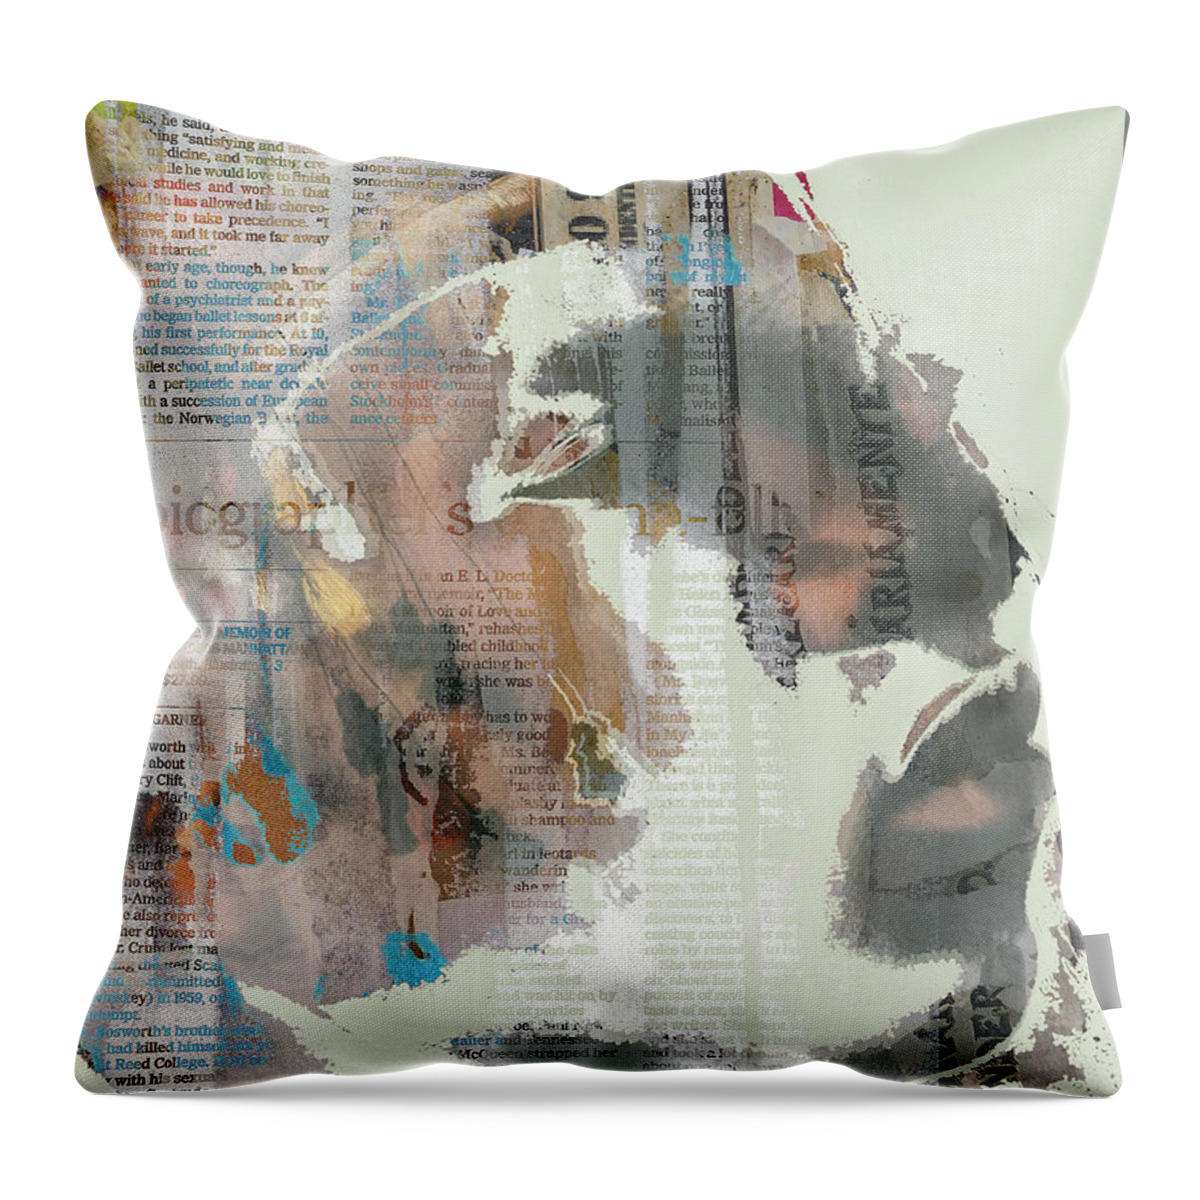 Digitalart Throw Pillow featuring the digital art The young african man by Gabi Hampe